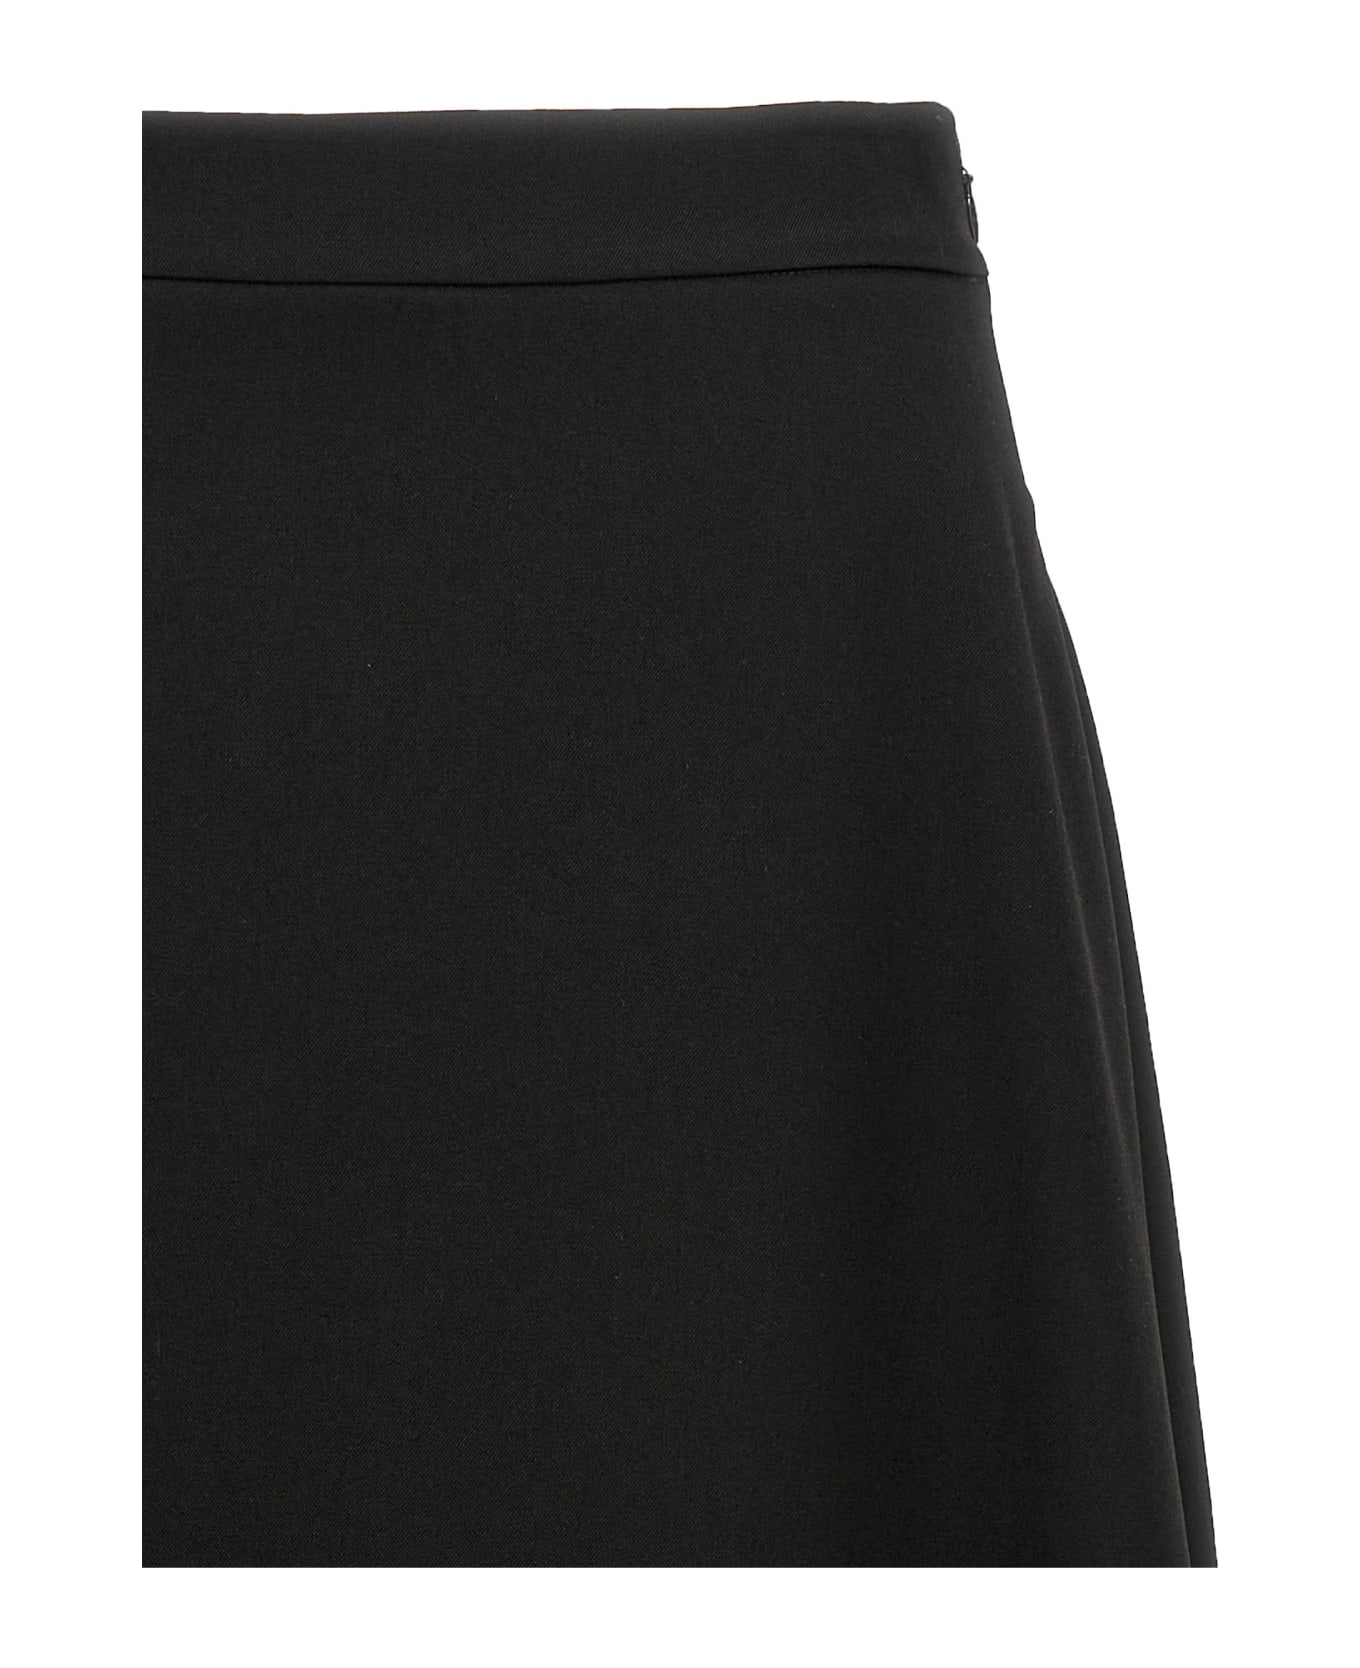 Jil Sander Asymmetrical Skirt - Black スカート